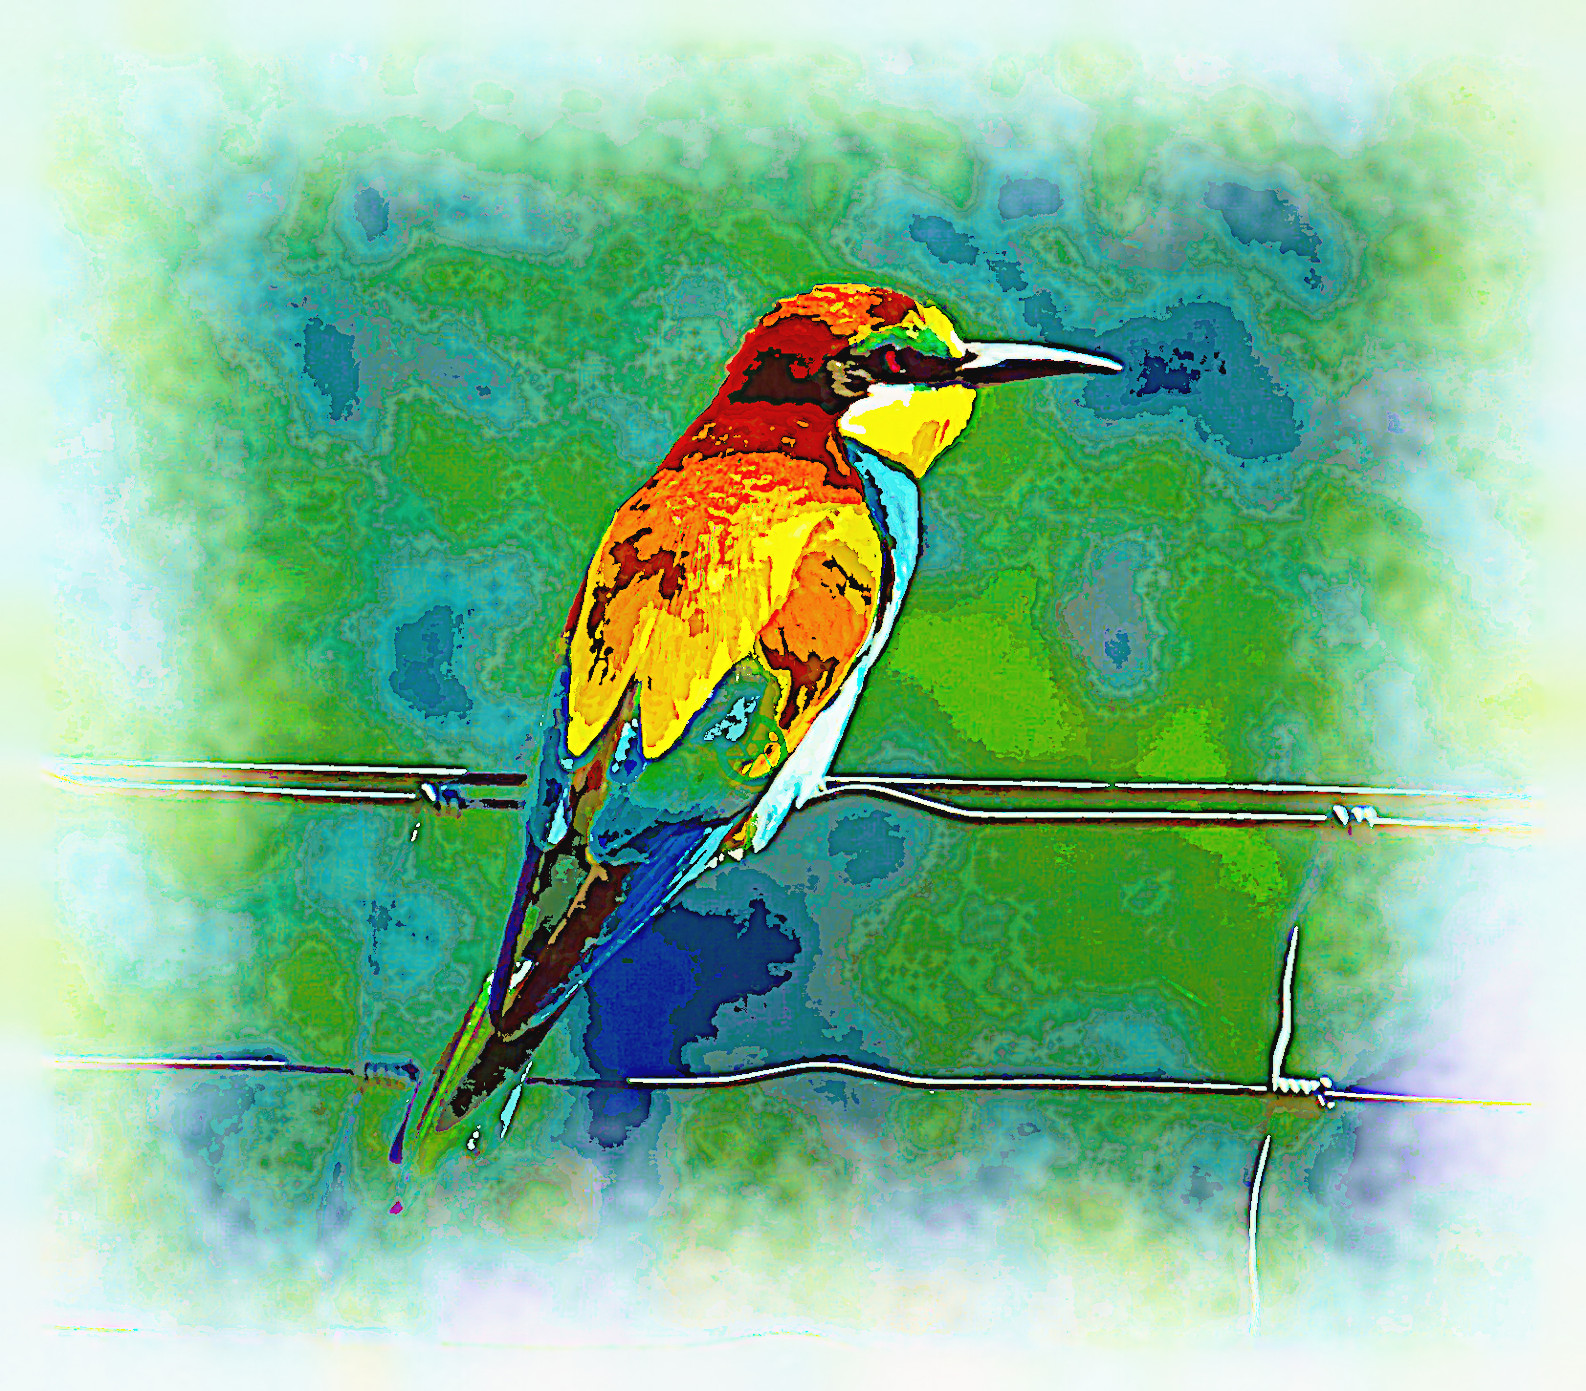 2020-04-19 15-38-27 photo-1563278689-3519903a3e97 as a digital aquarel, using18 colours, source animal, look colour contrast plus.jpg